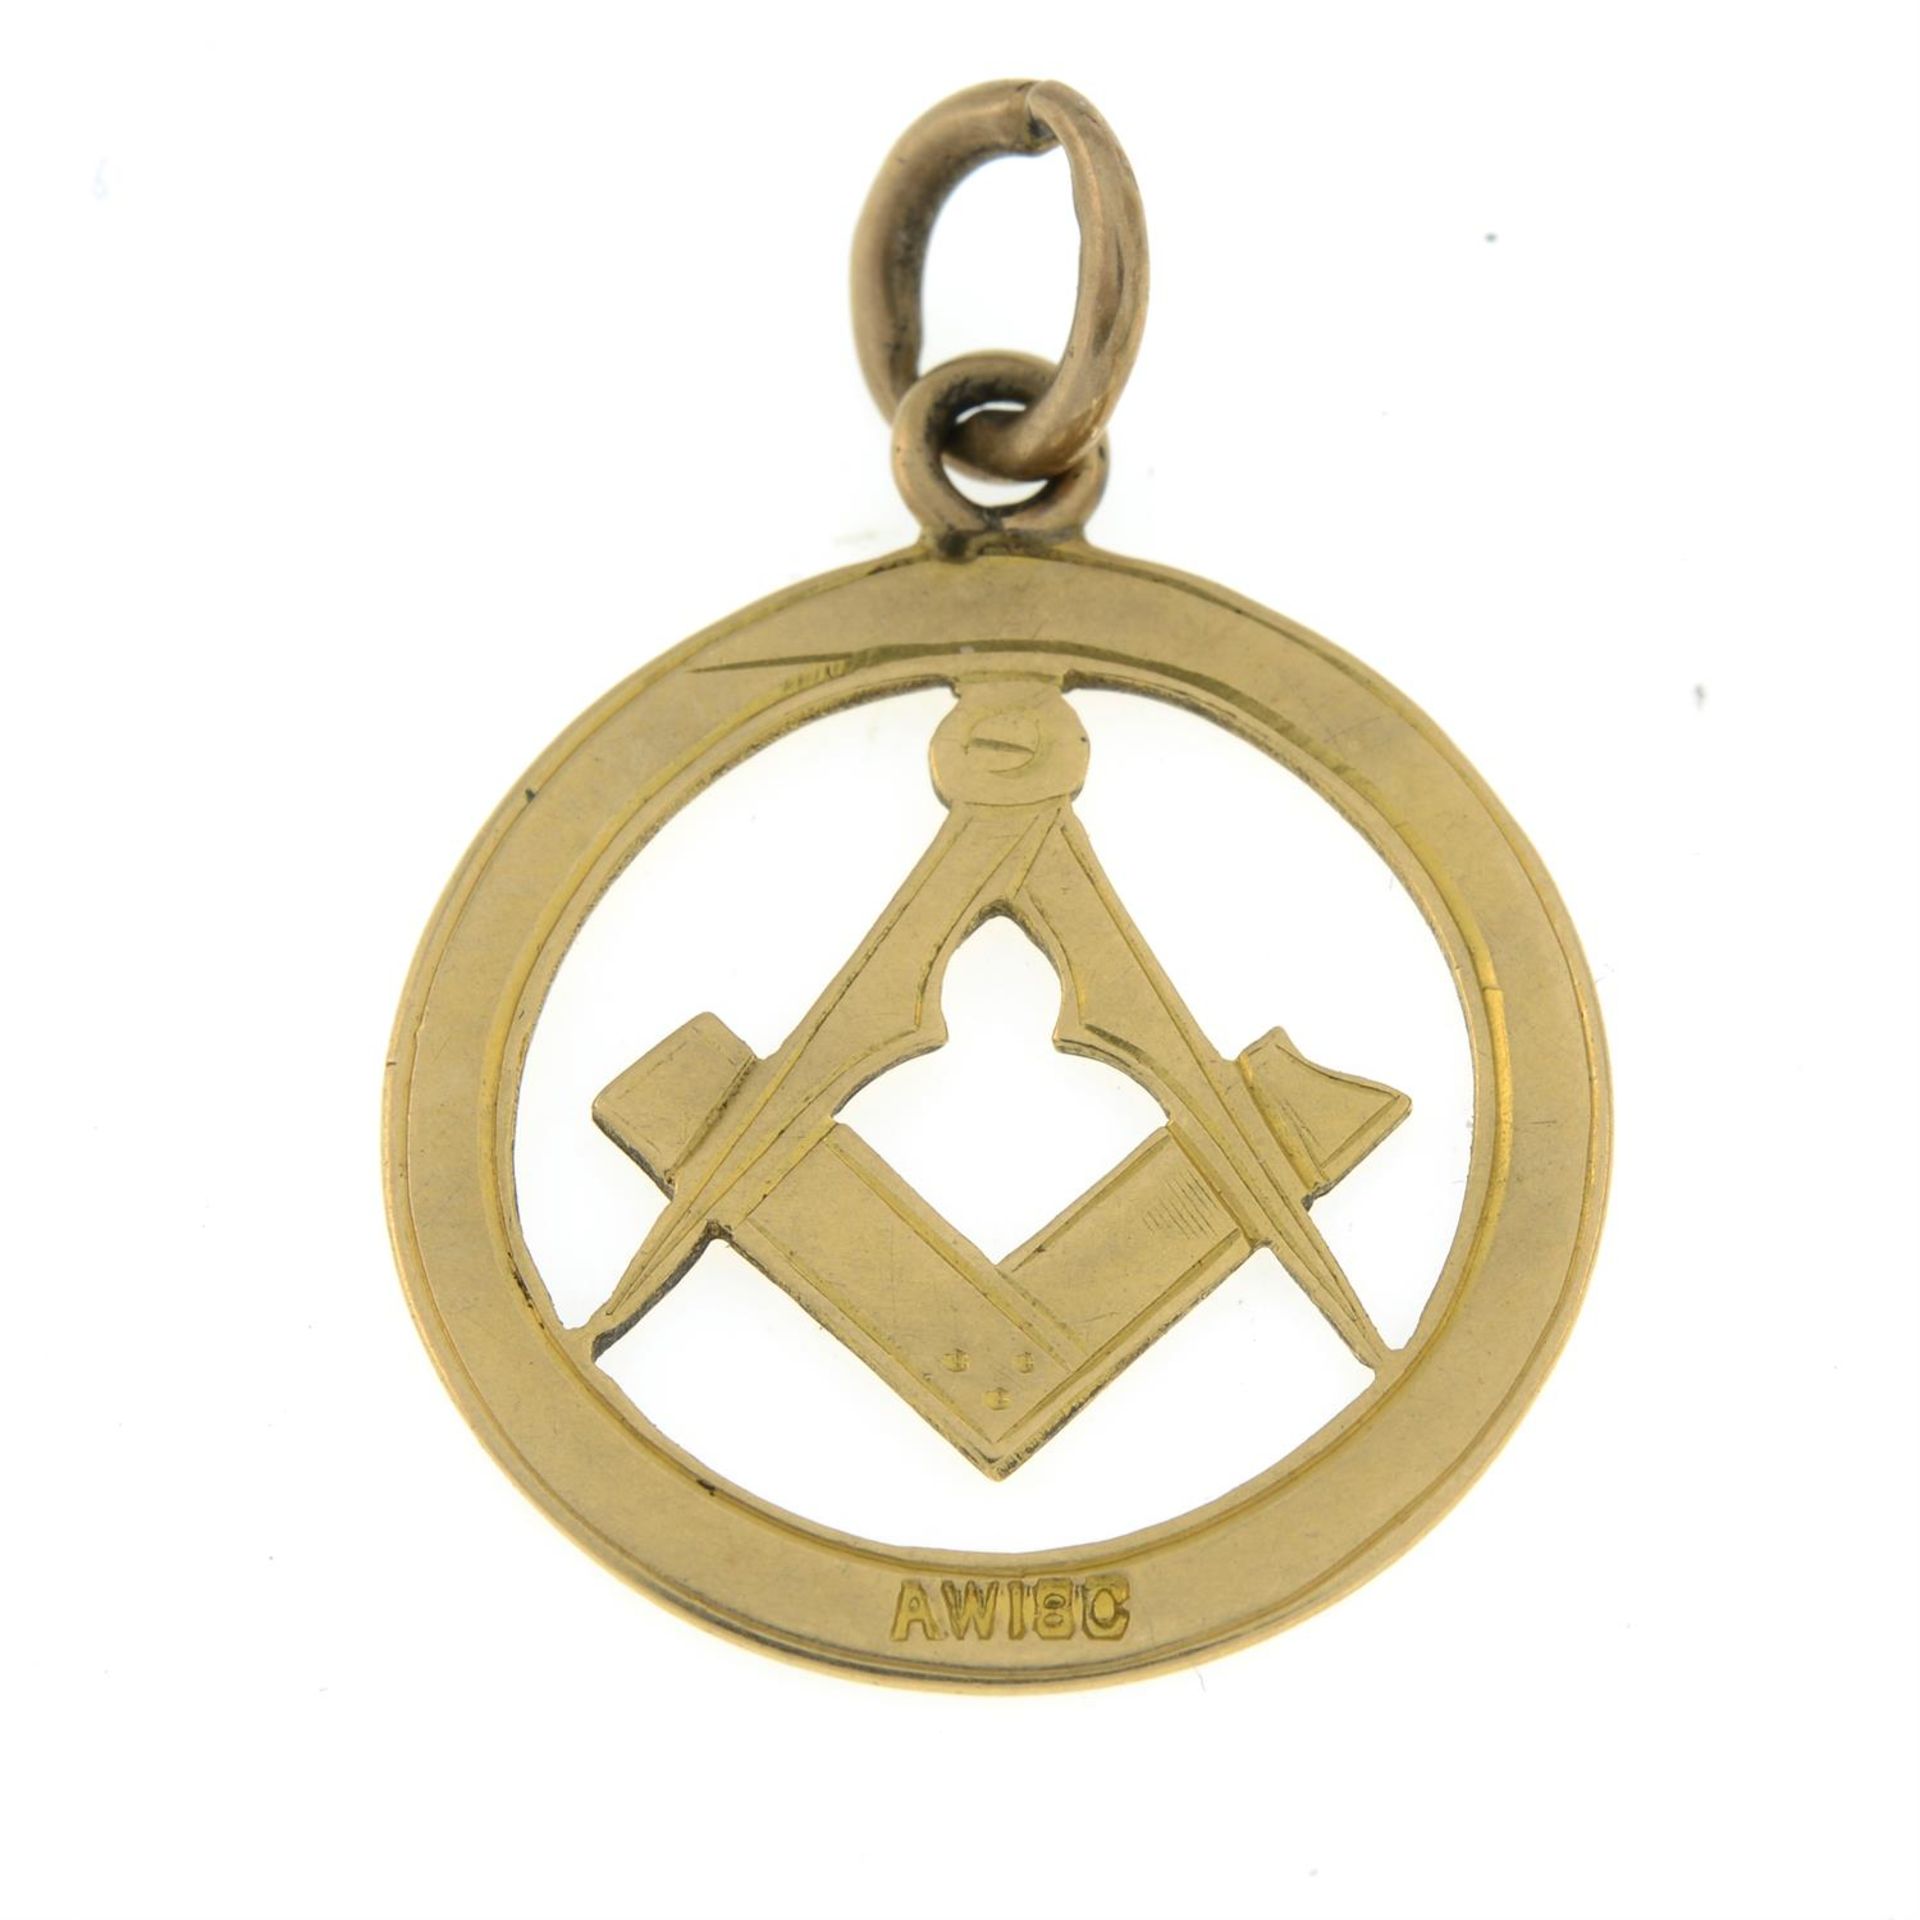 Masonic pendant - Image 2 of 2